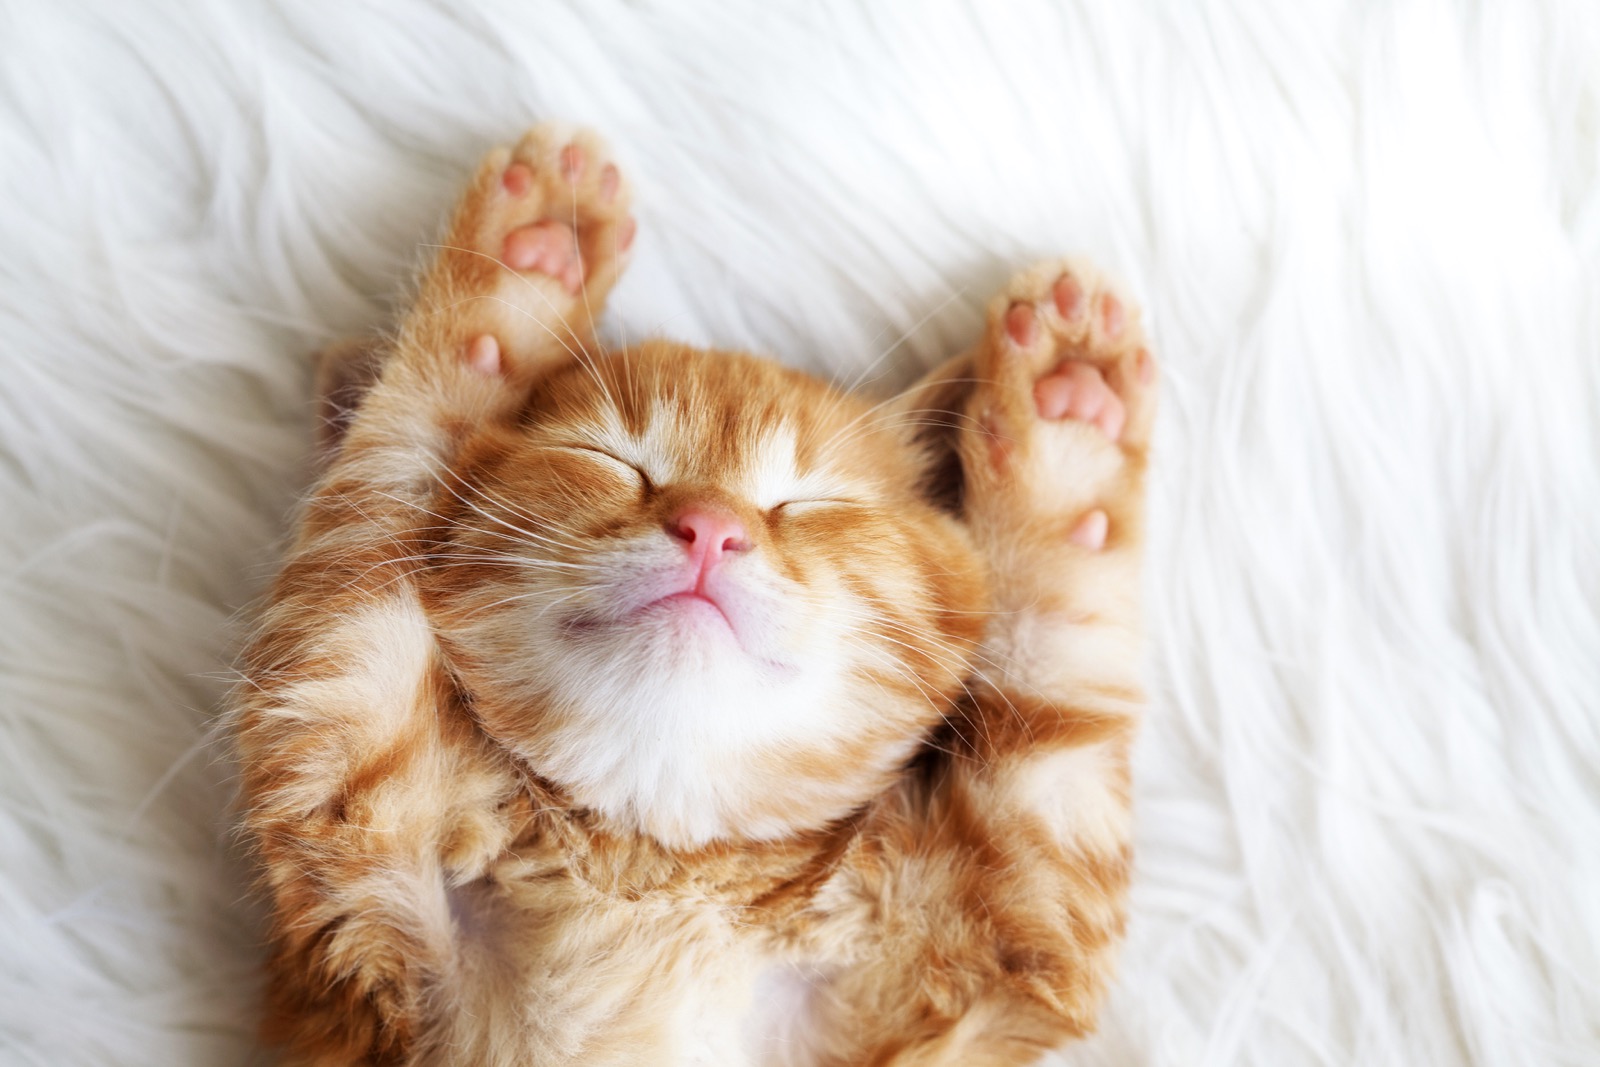 Are You A Black Cat Or Golden Retriever? Quiz Ginger cat kitten